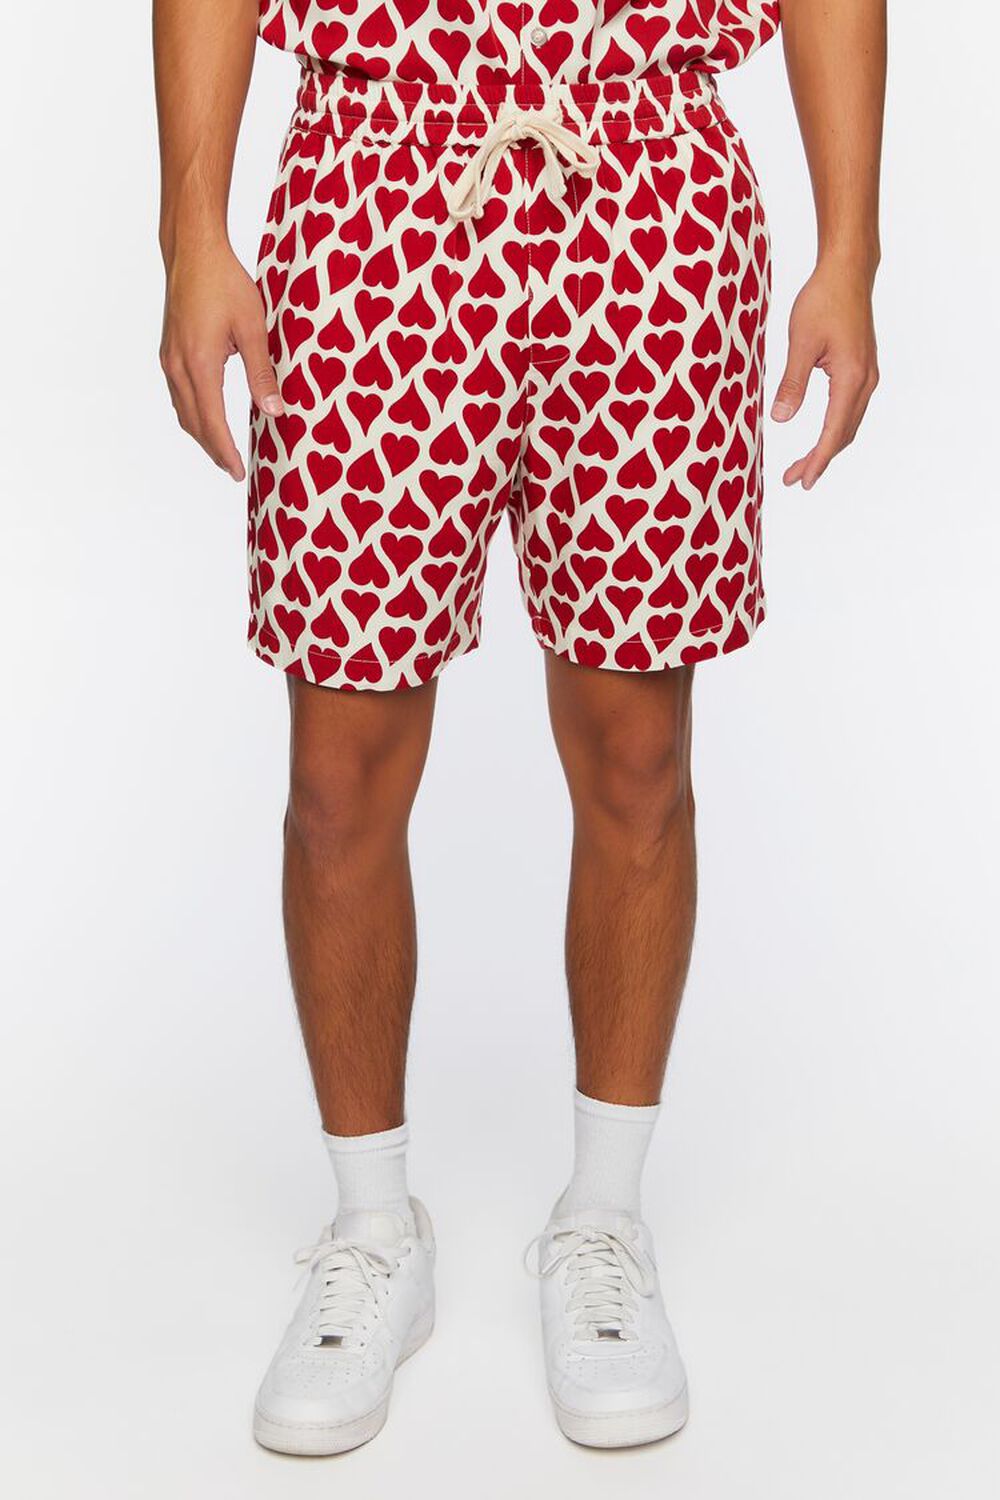 WHITE/RED Heart Print Drawstring Shorts, image 2